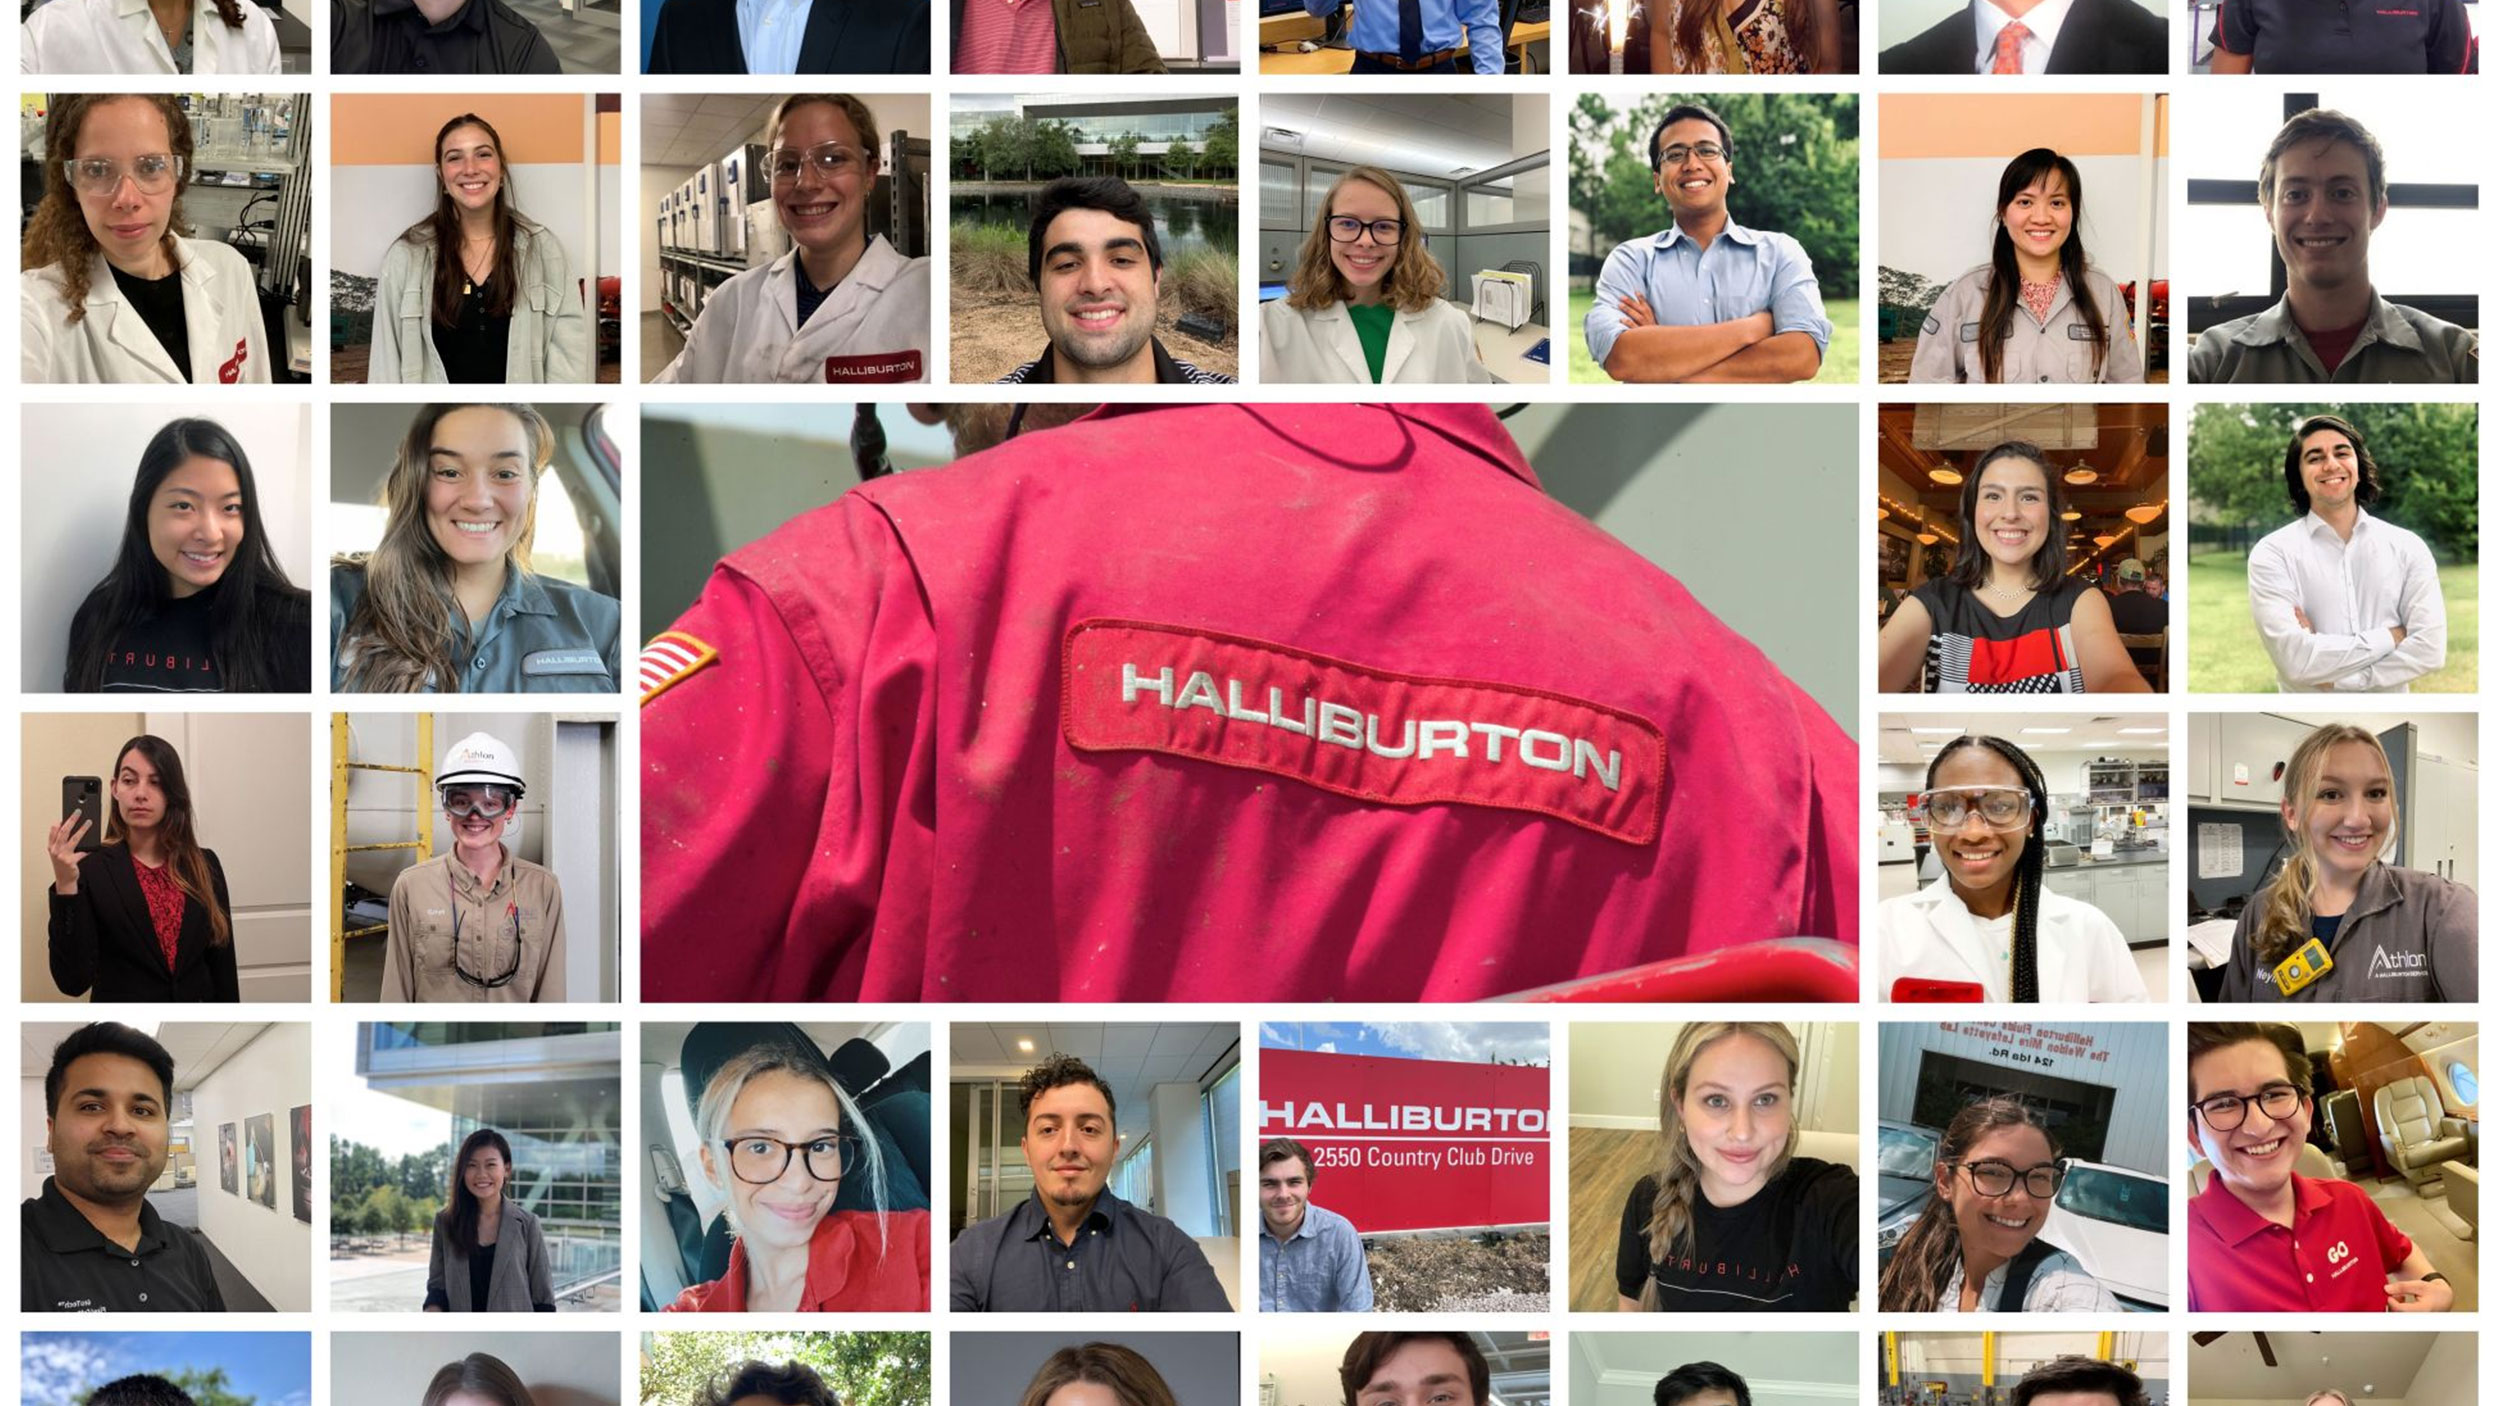 Recruit once, hire twice - Halliburton's intern philosophy